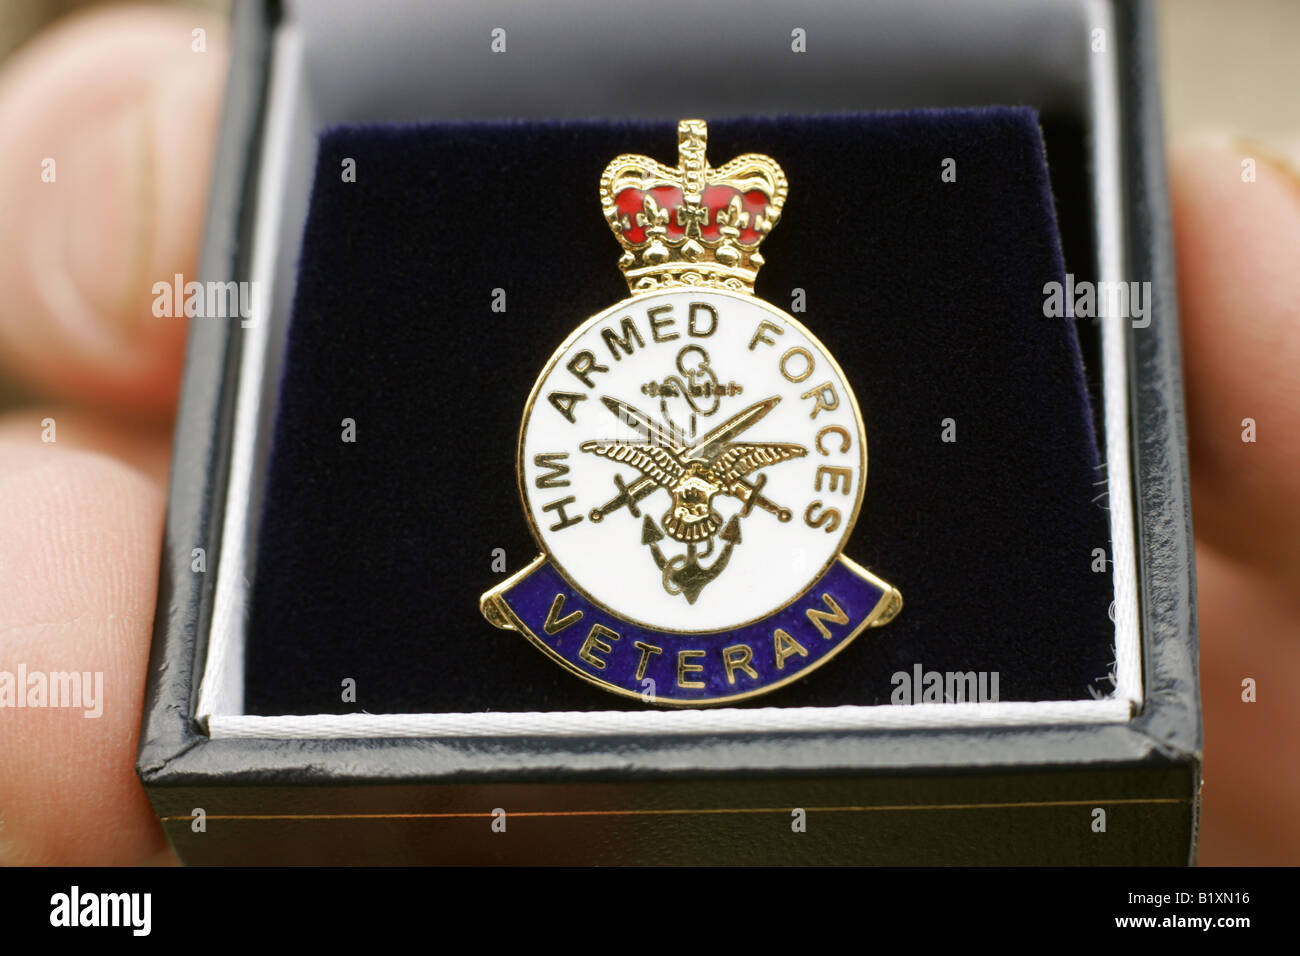 ARMED FORCES ENAMEL PIN BADGE UK VETERAN REMEMBRANCE DAY 2019 